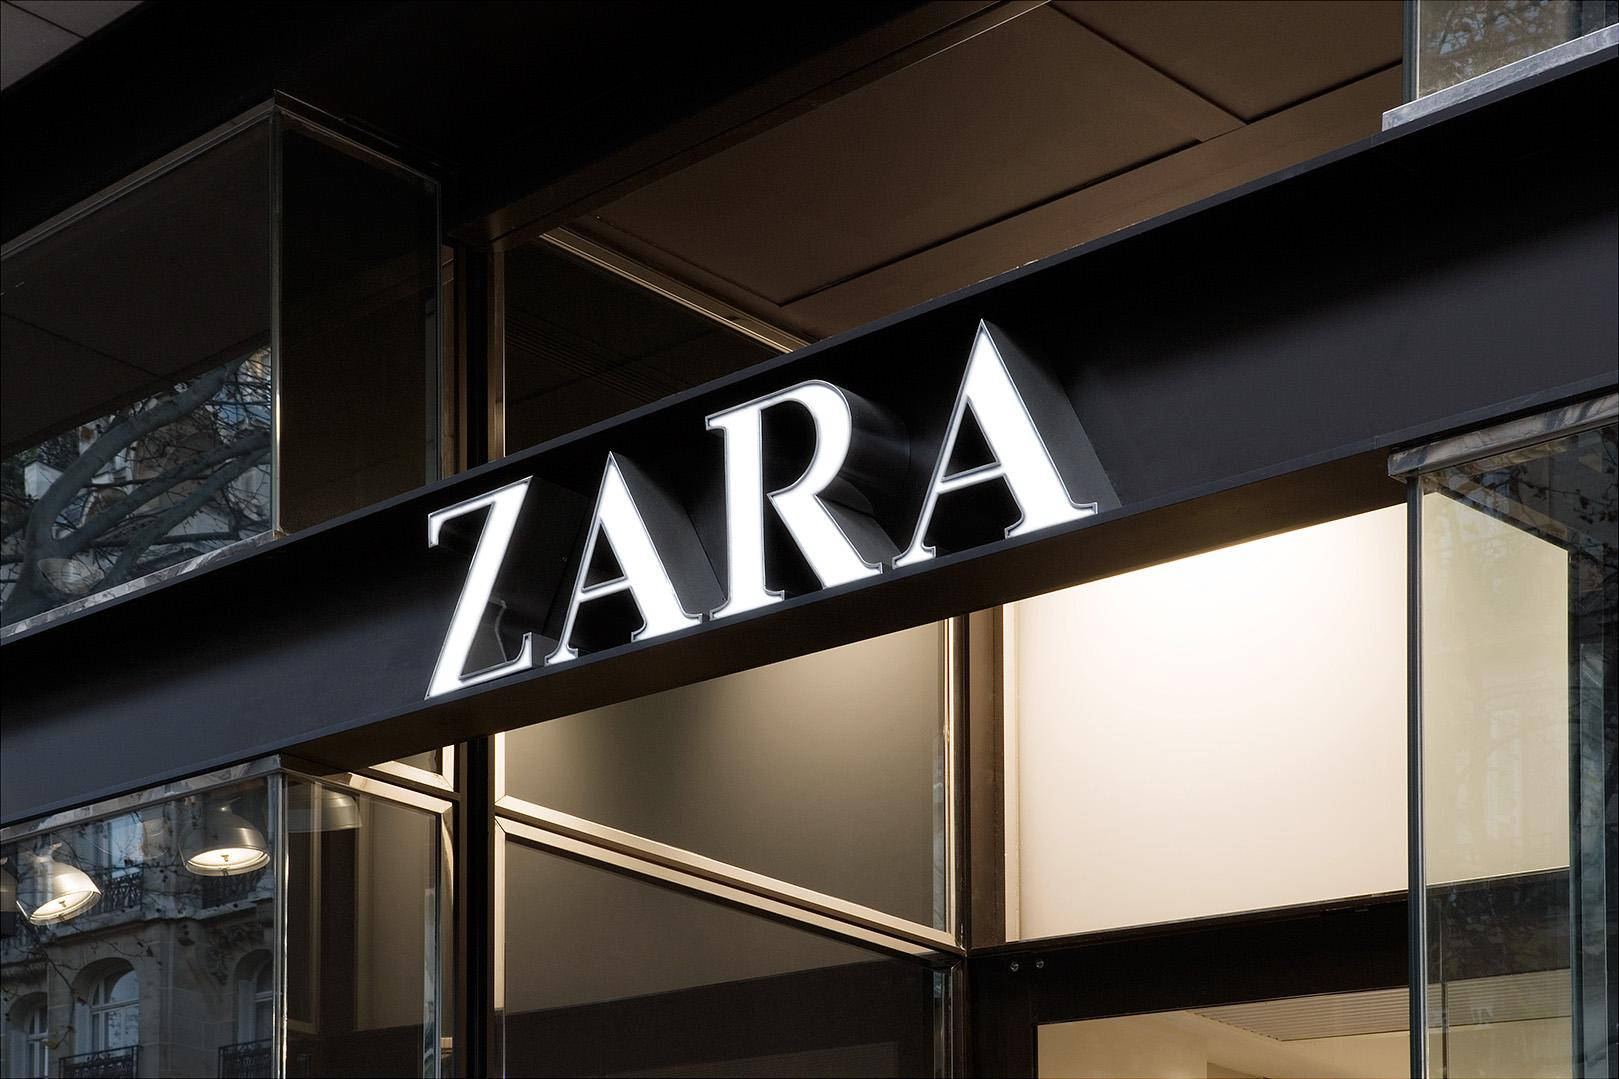 Zara Fashion Store Signage Wallpaper